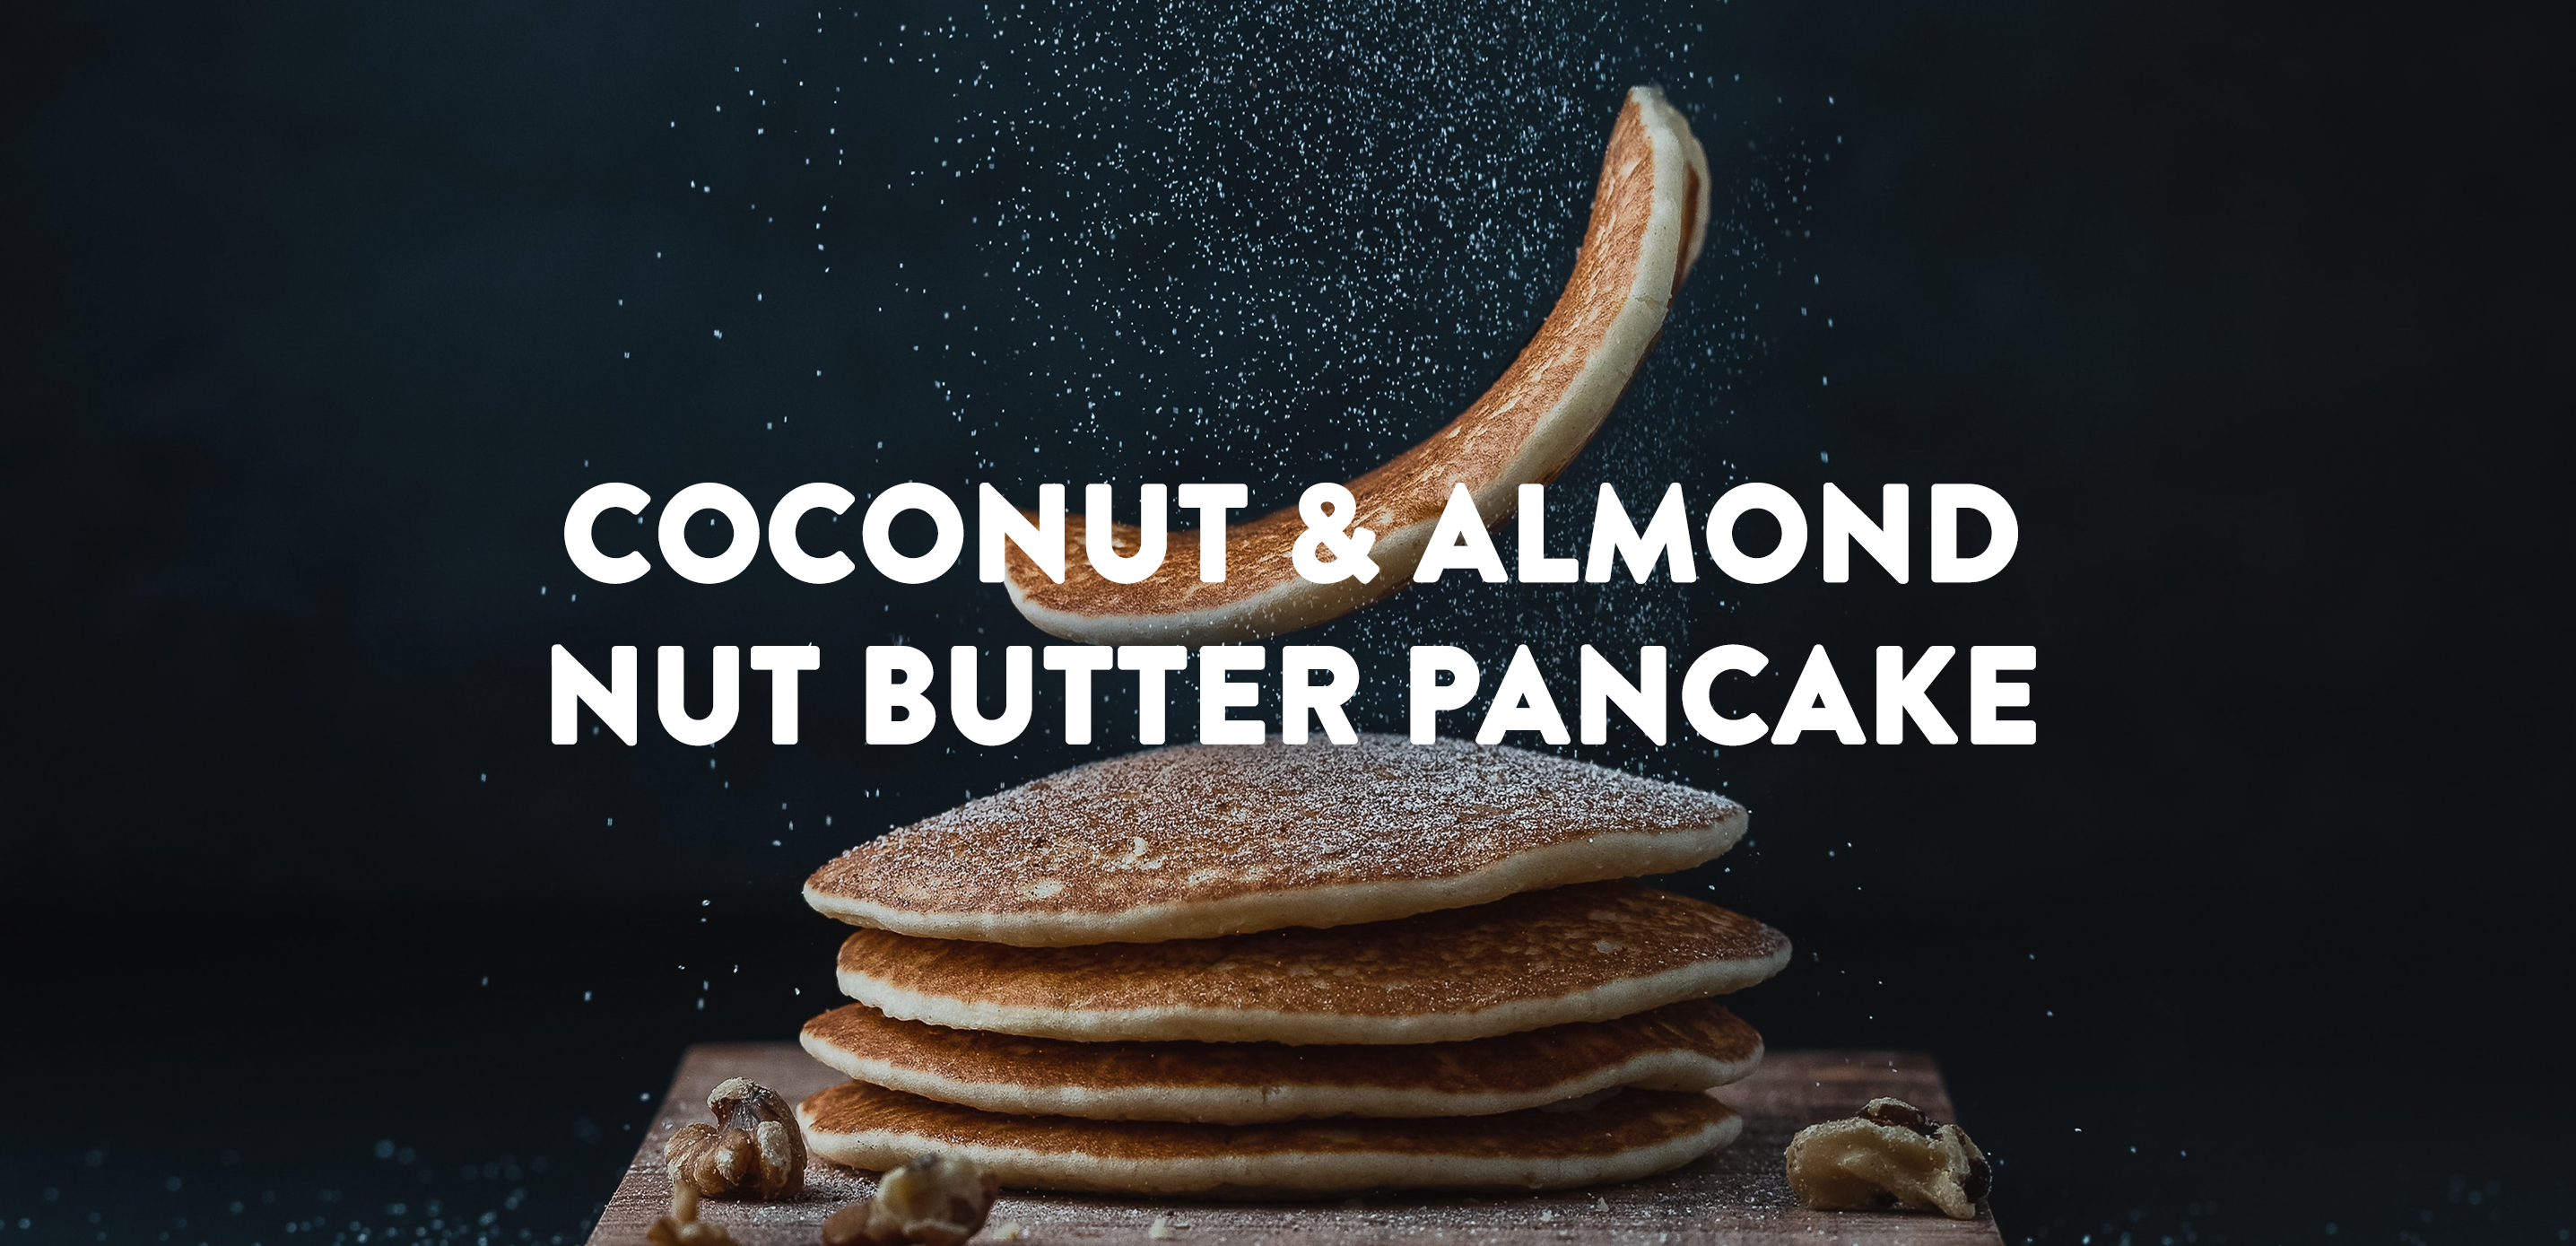 Coconut & Almond Nut Butter Pancake